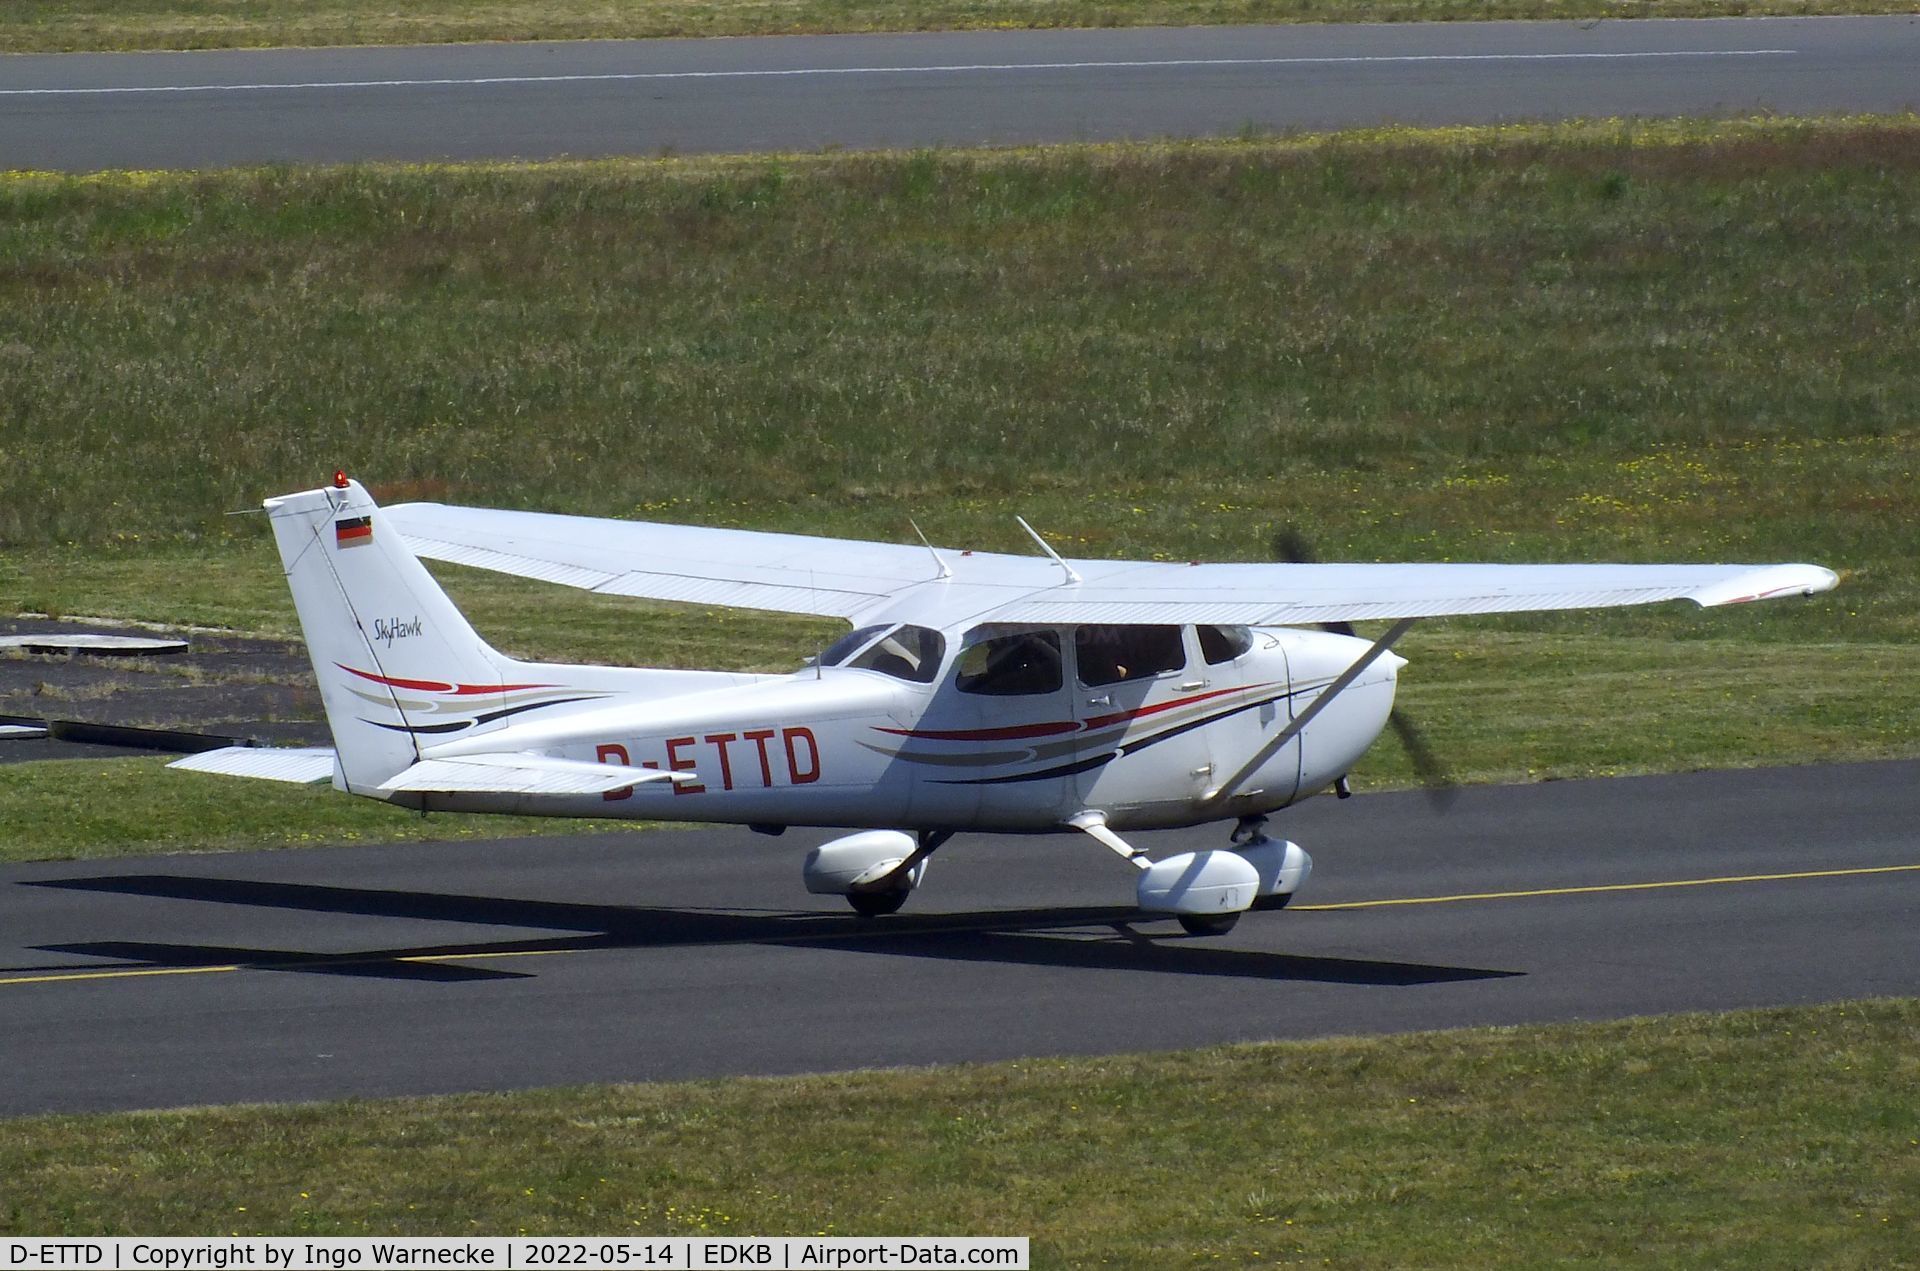 D-ETTD, 2004 Cessna 172R Skyhawk C/N 172-81218, Cessna 172R Skyhawk at Bonn-Hangelar airfield '2205-06